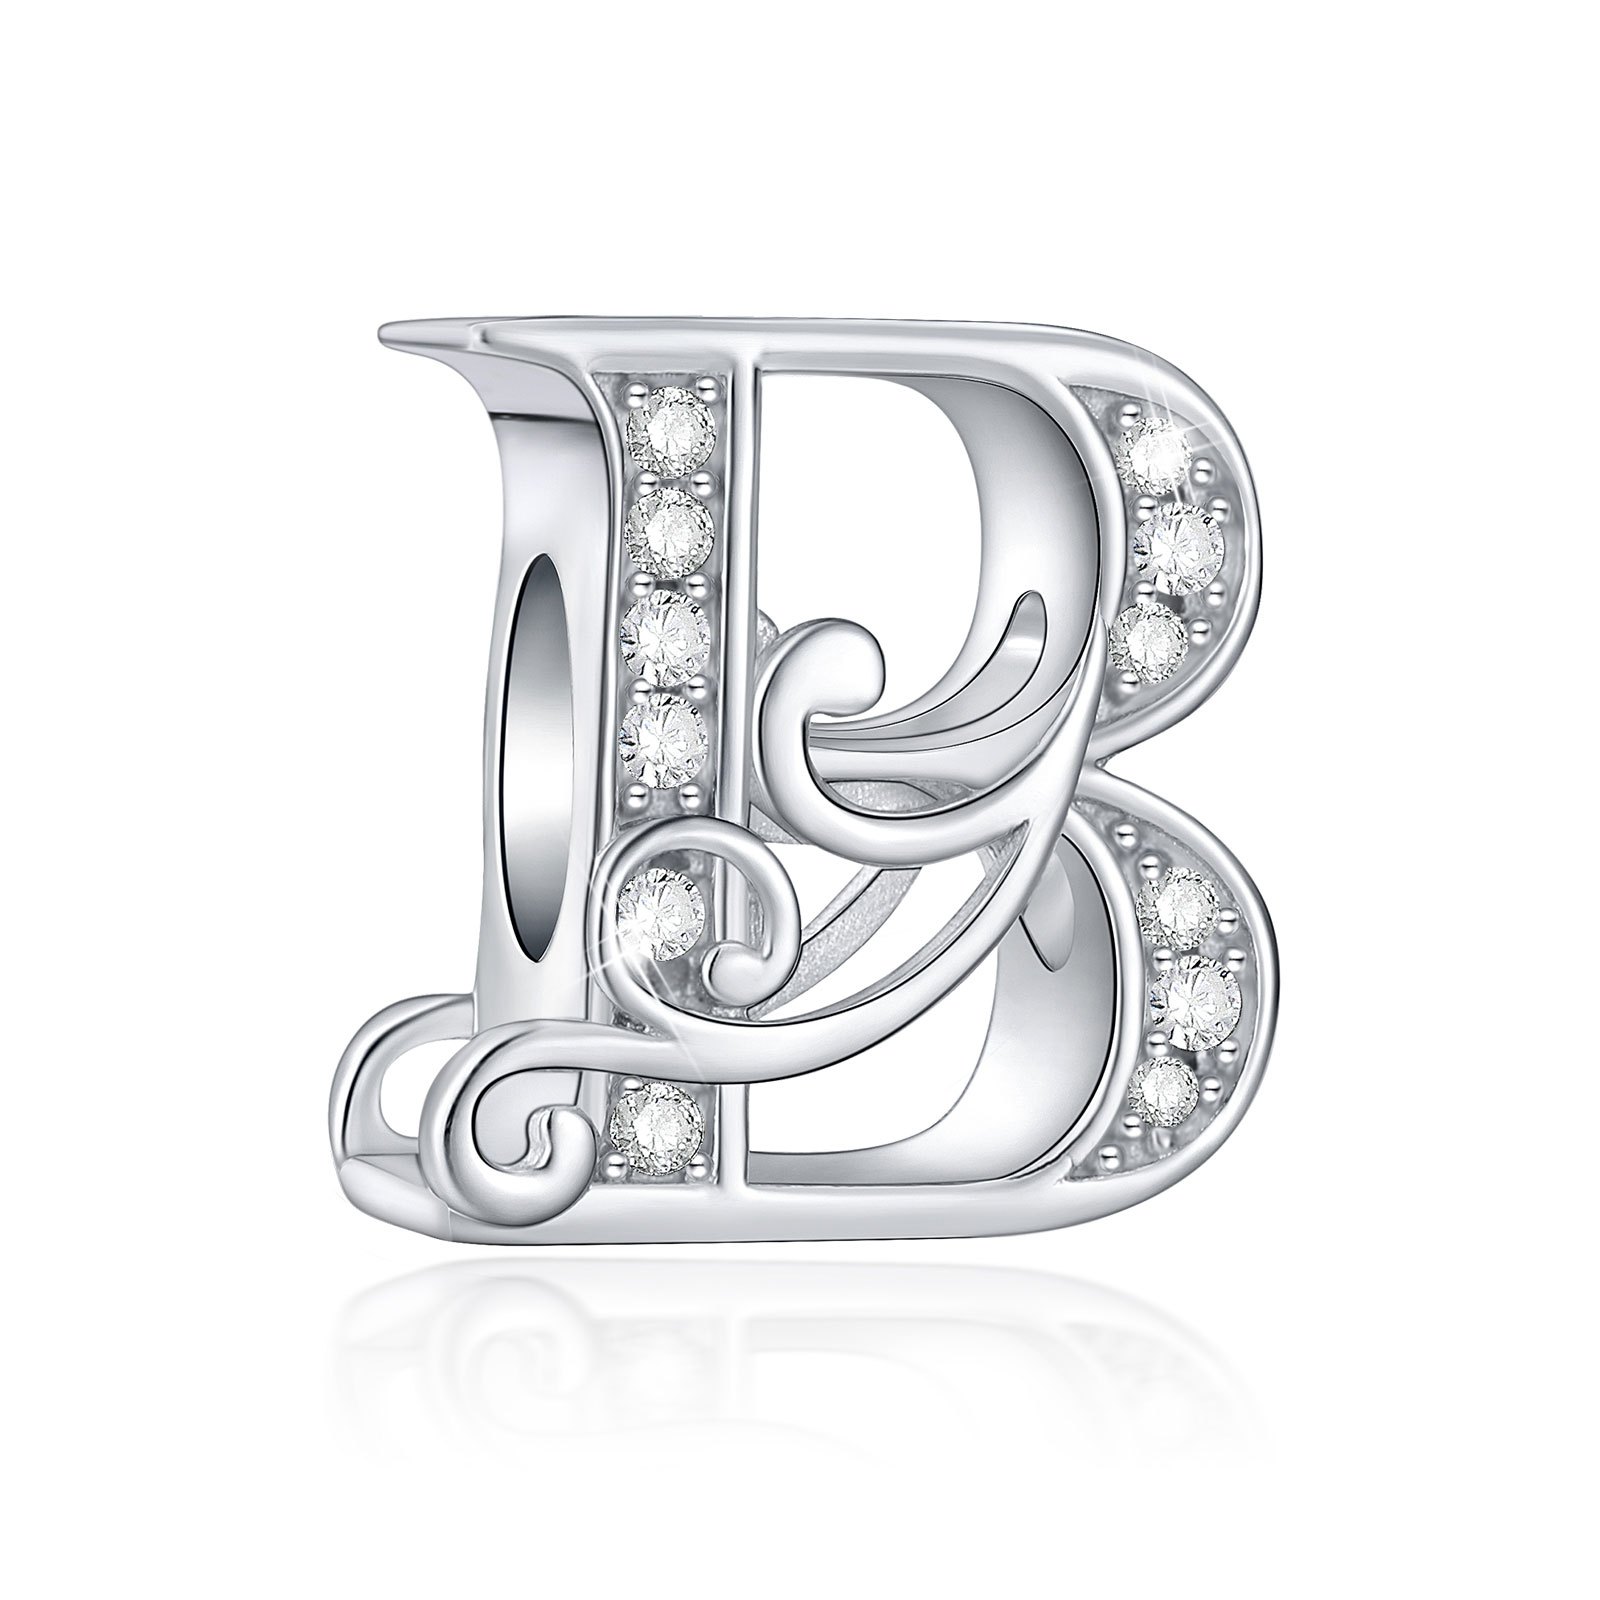 PARCOM Initial Charms Fits Pandora Bracelet S925 Sterling Silver Letter Charms for Bracelets Alphabet A-Z Letters Bead Bracelet for Women Girls